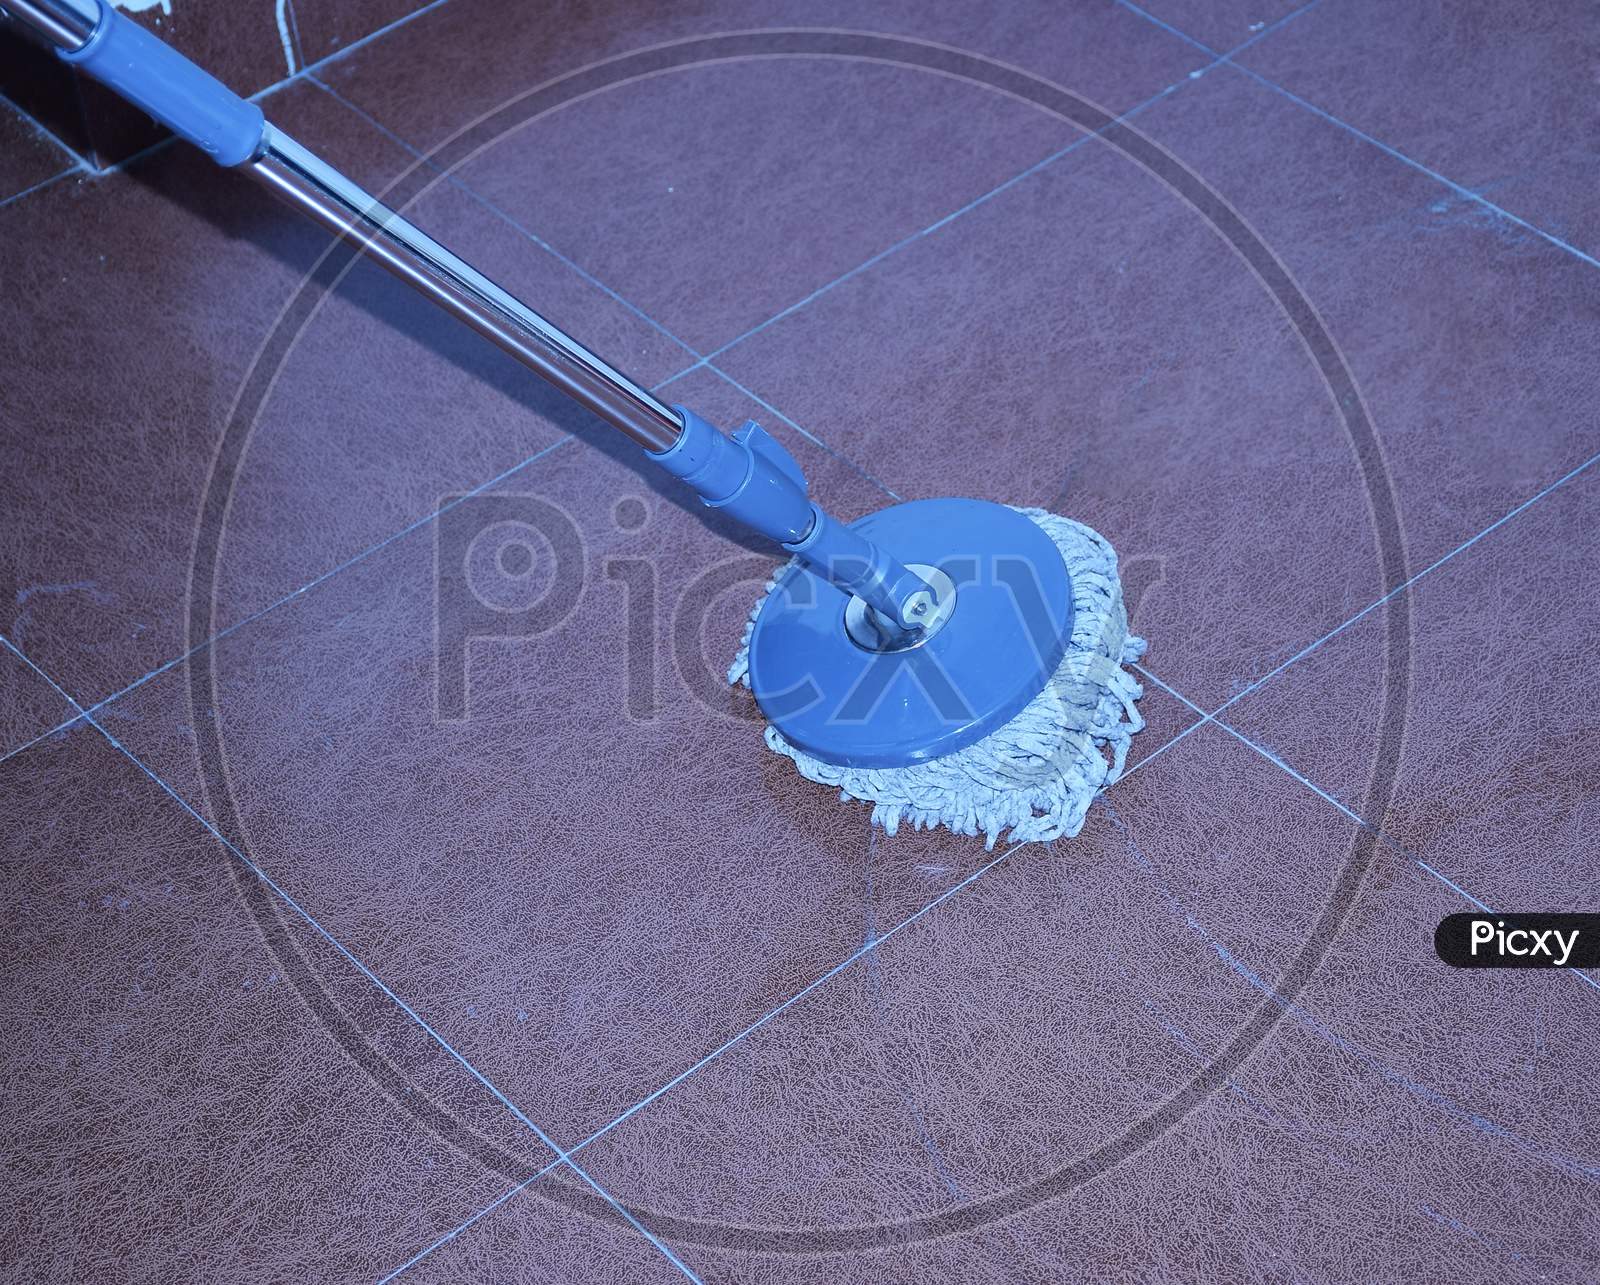 Cleaning floor